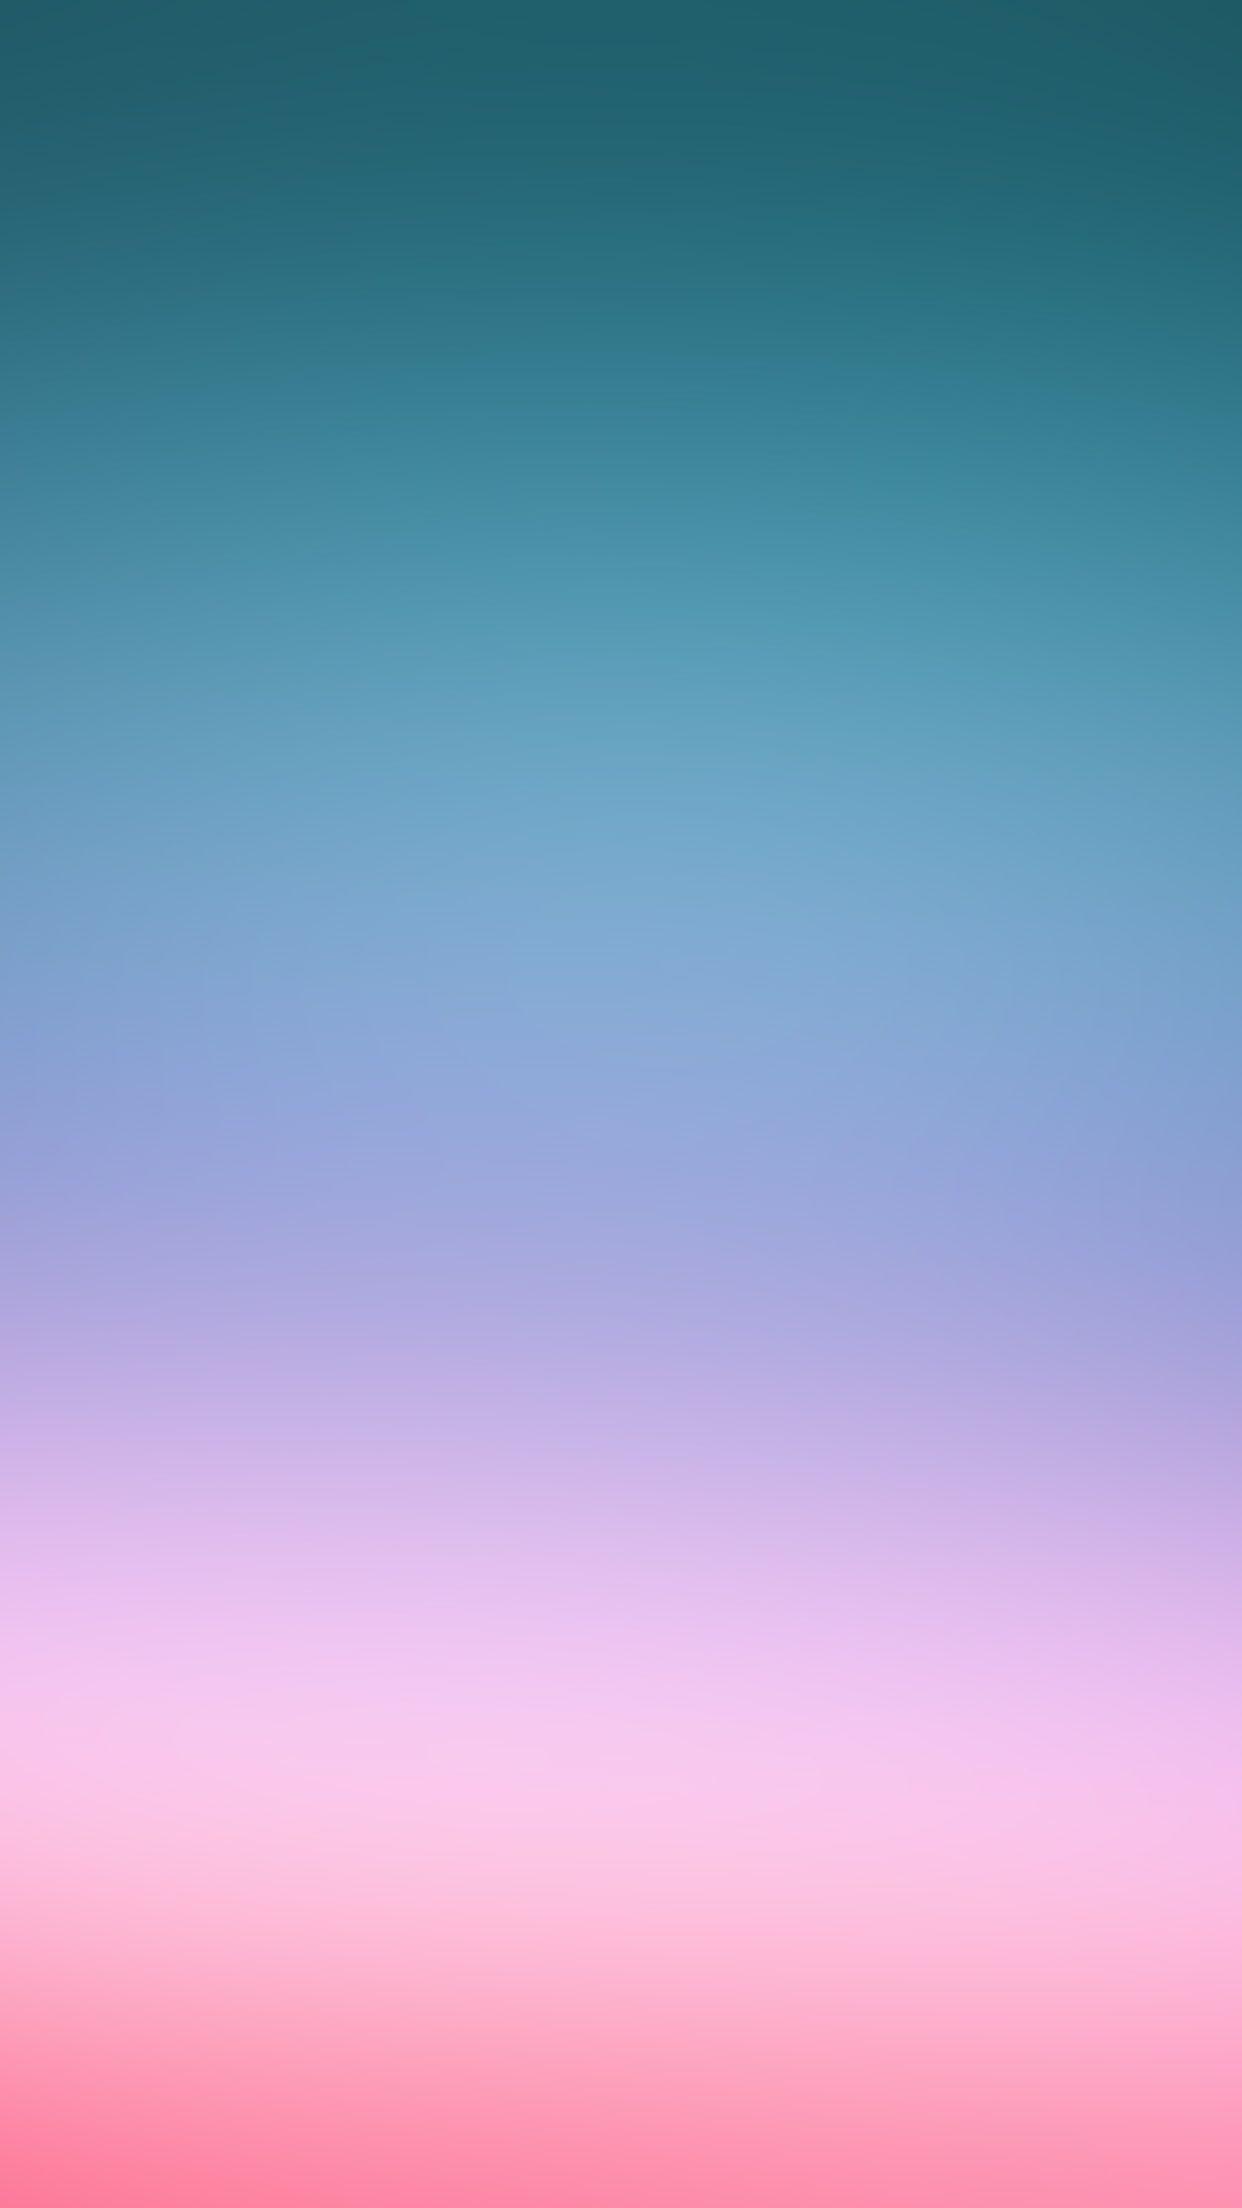 iPhone7 wallpaper. pink blue soft pastel